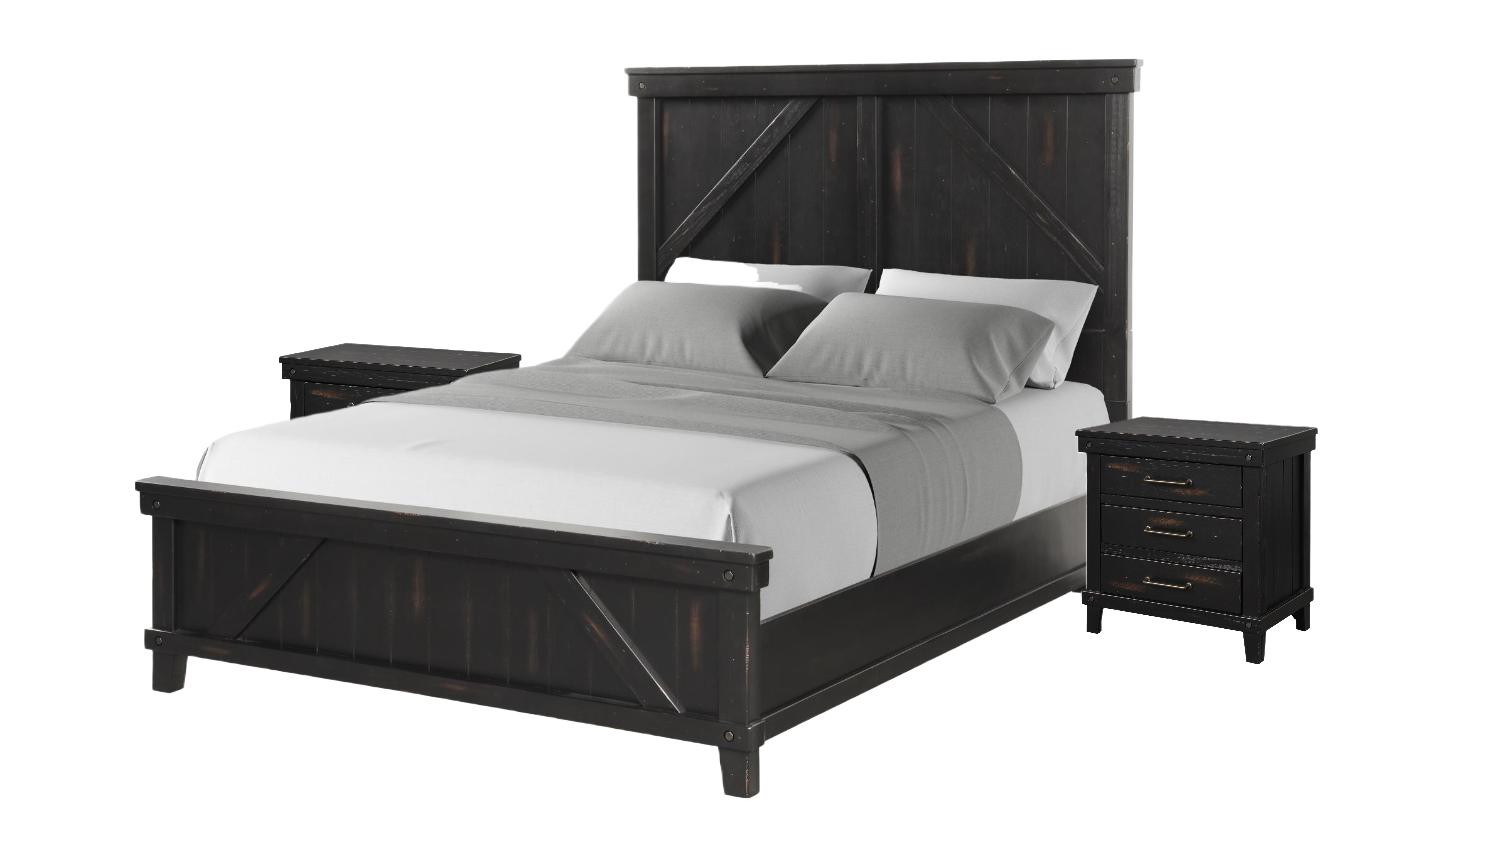 Classic, Transitional Panel Bedroom Set SPRUCE CREEK 1708-105-Set-3 1708-105-2N-3PC in Black 